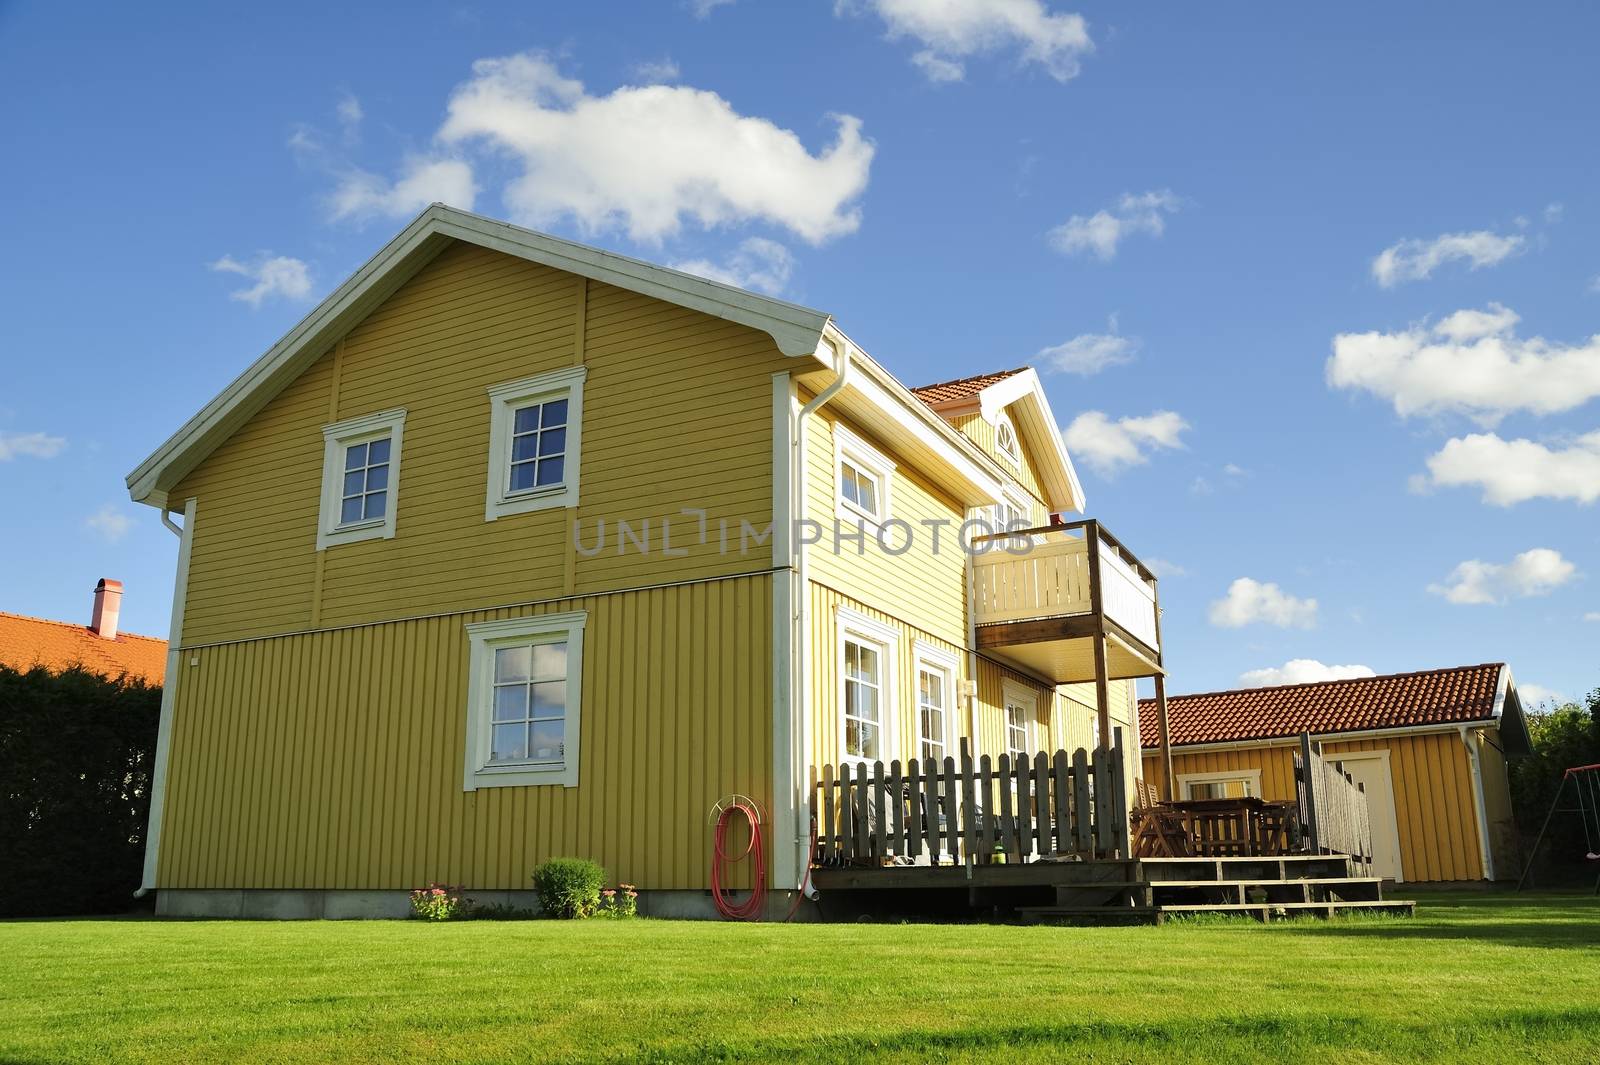 Swedish housing by a40757